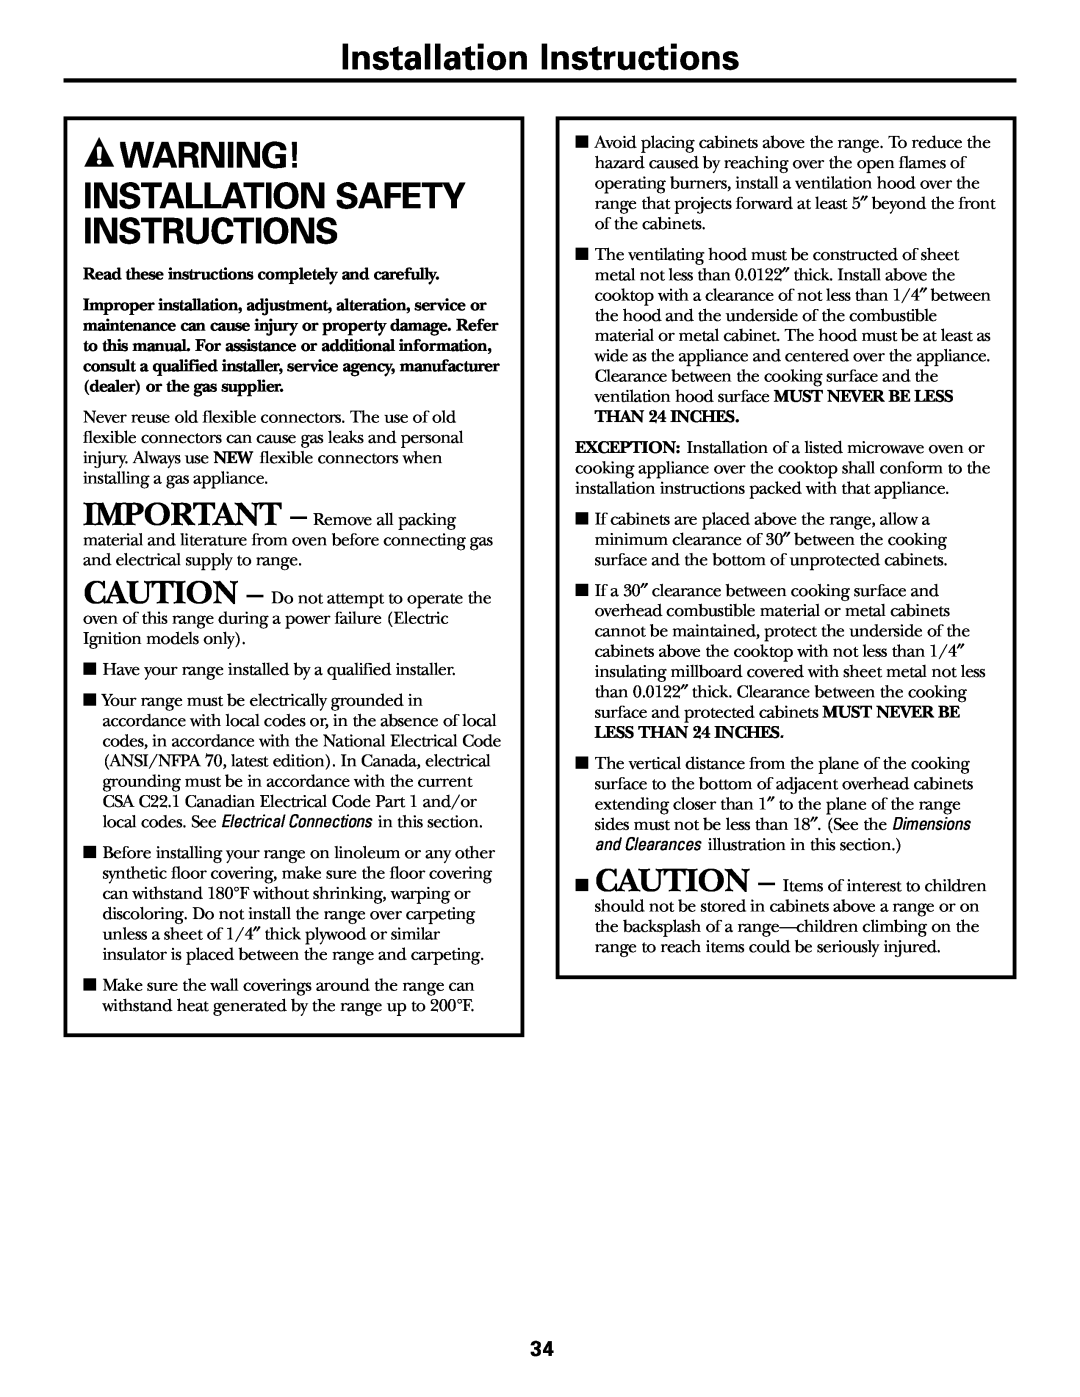 GE JGBP36, JGBP99, JGBP83 manual Installation Instructions, Installation Safety Instructions 